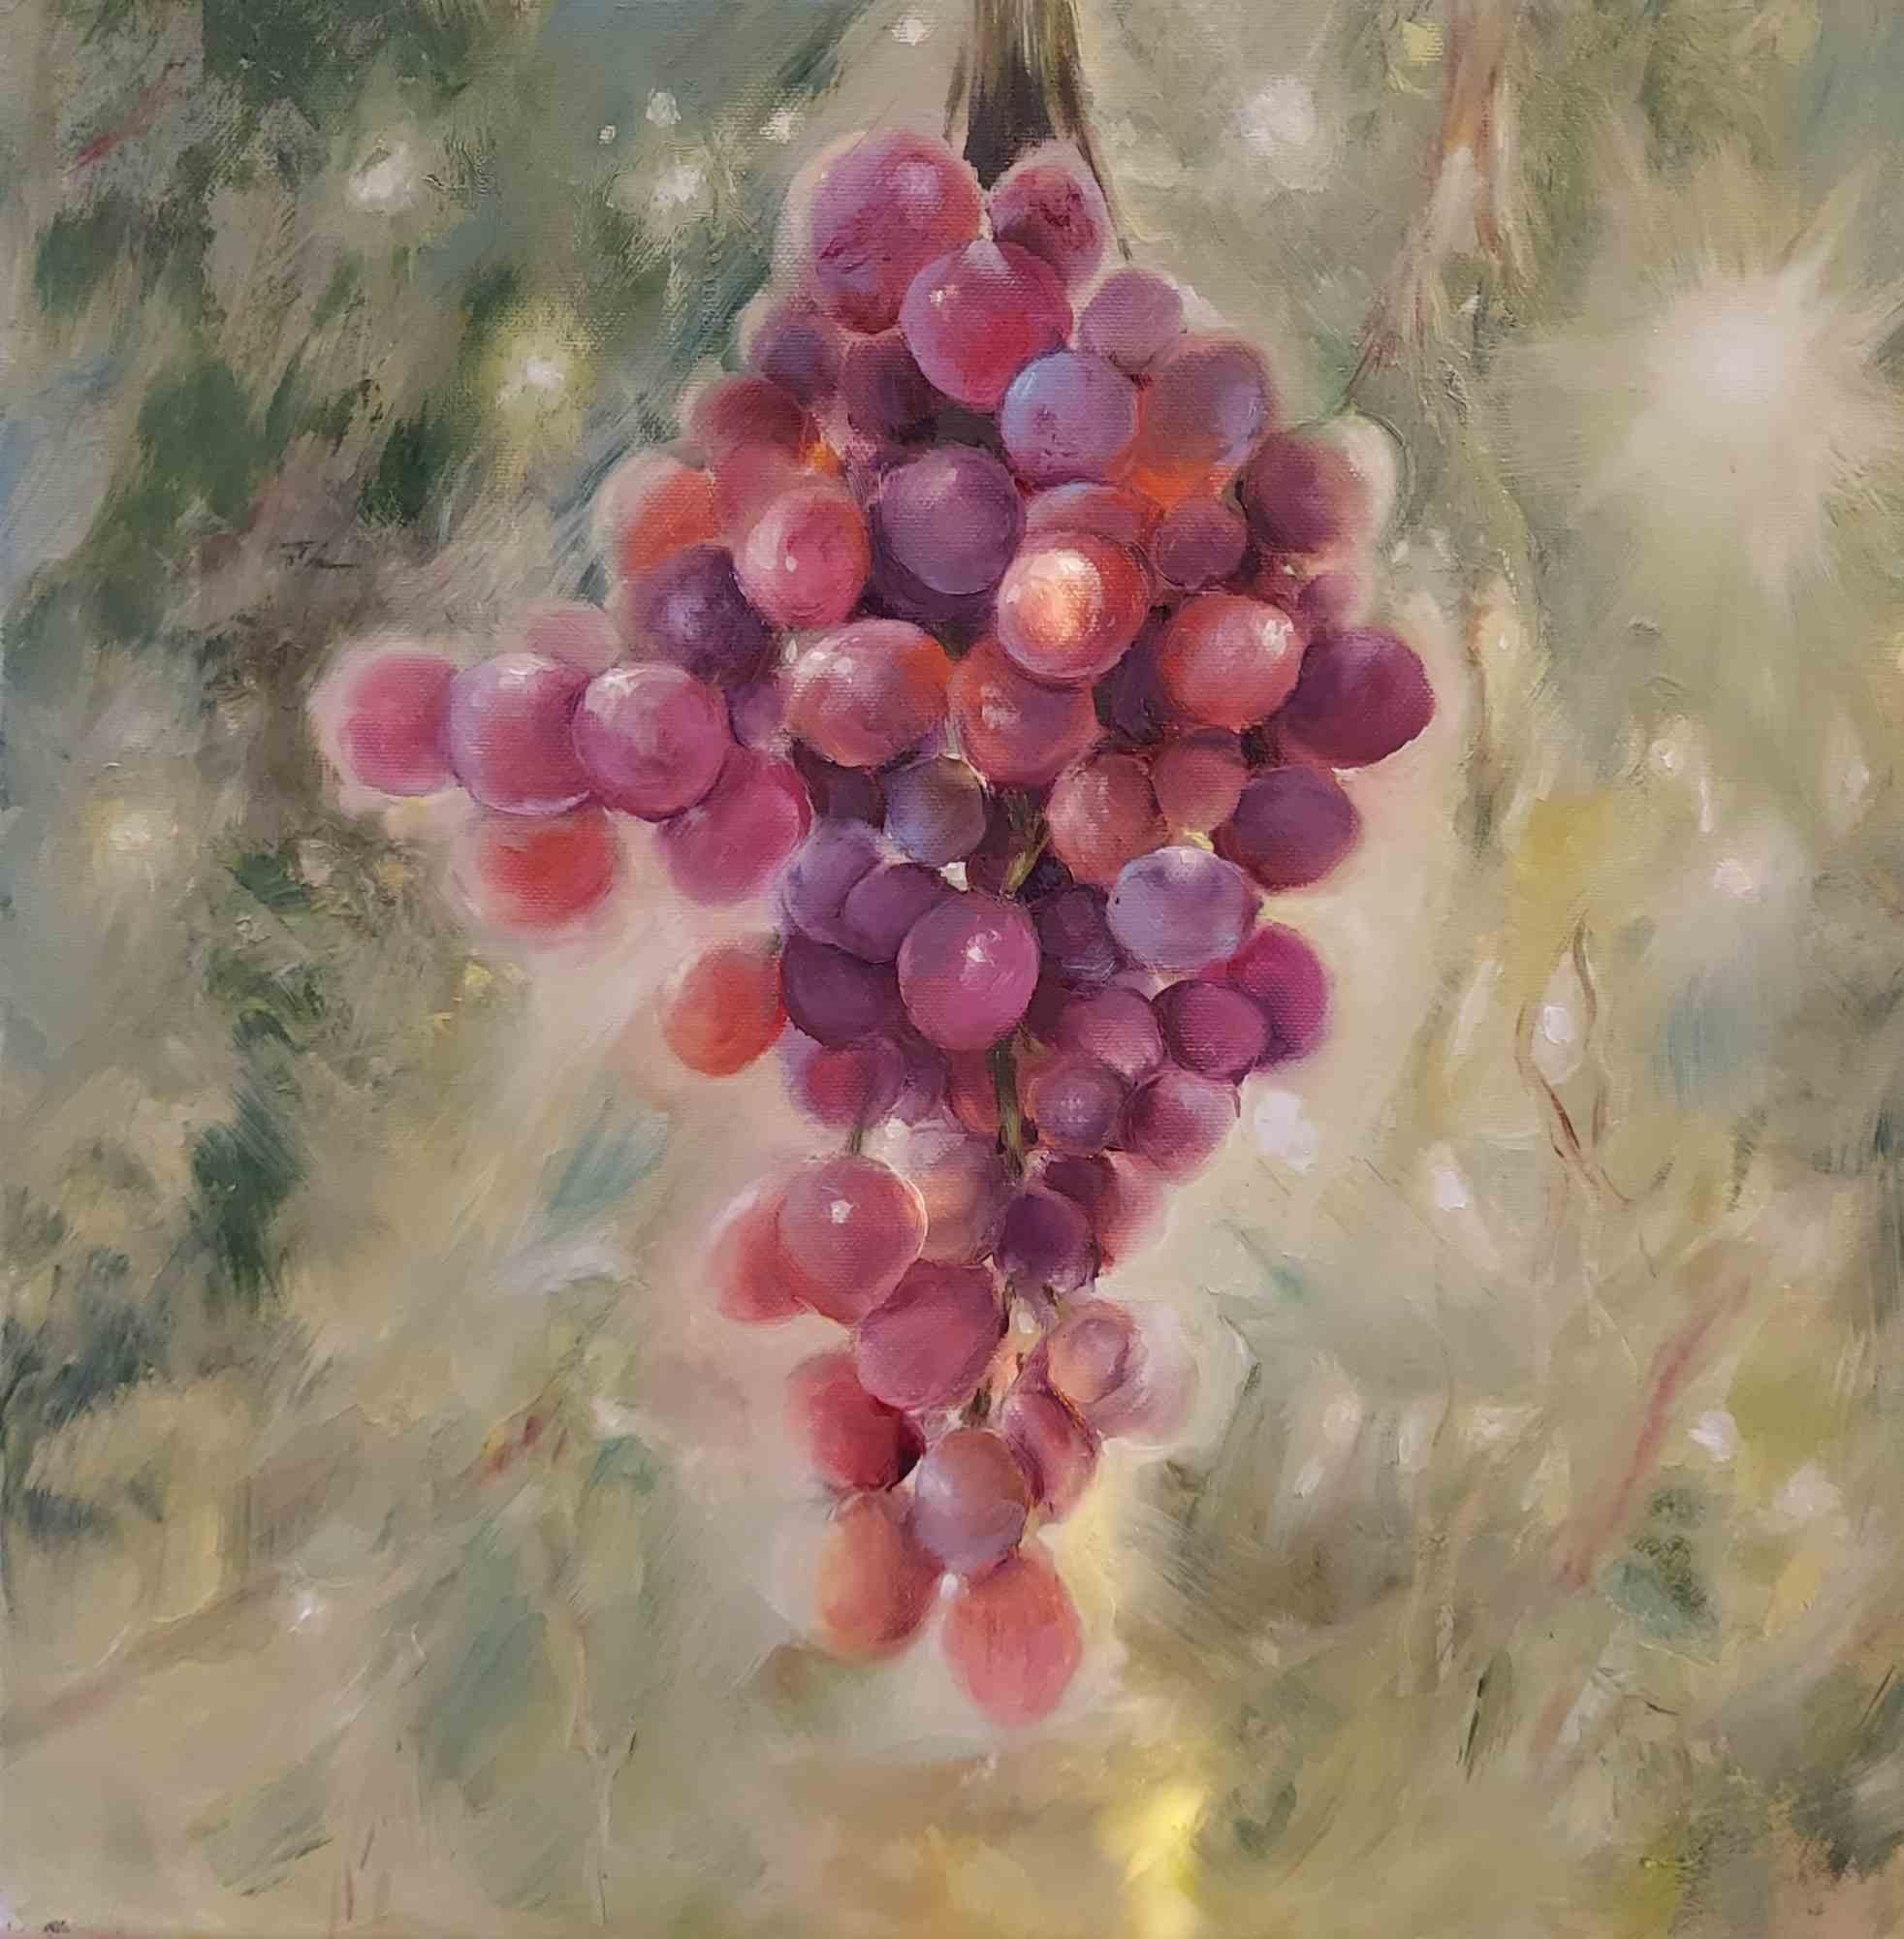 Grapes - Oil Painting by Elena Mardashova - 2021